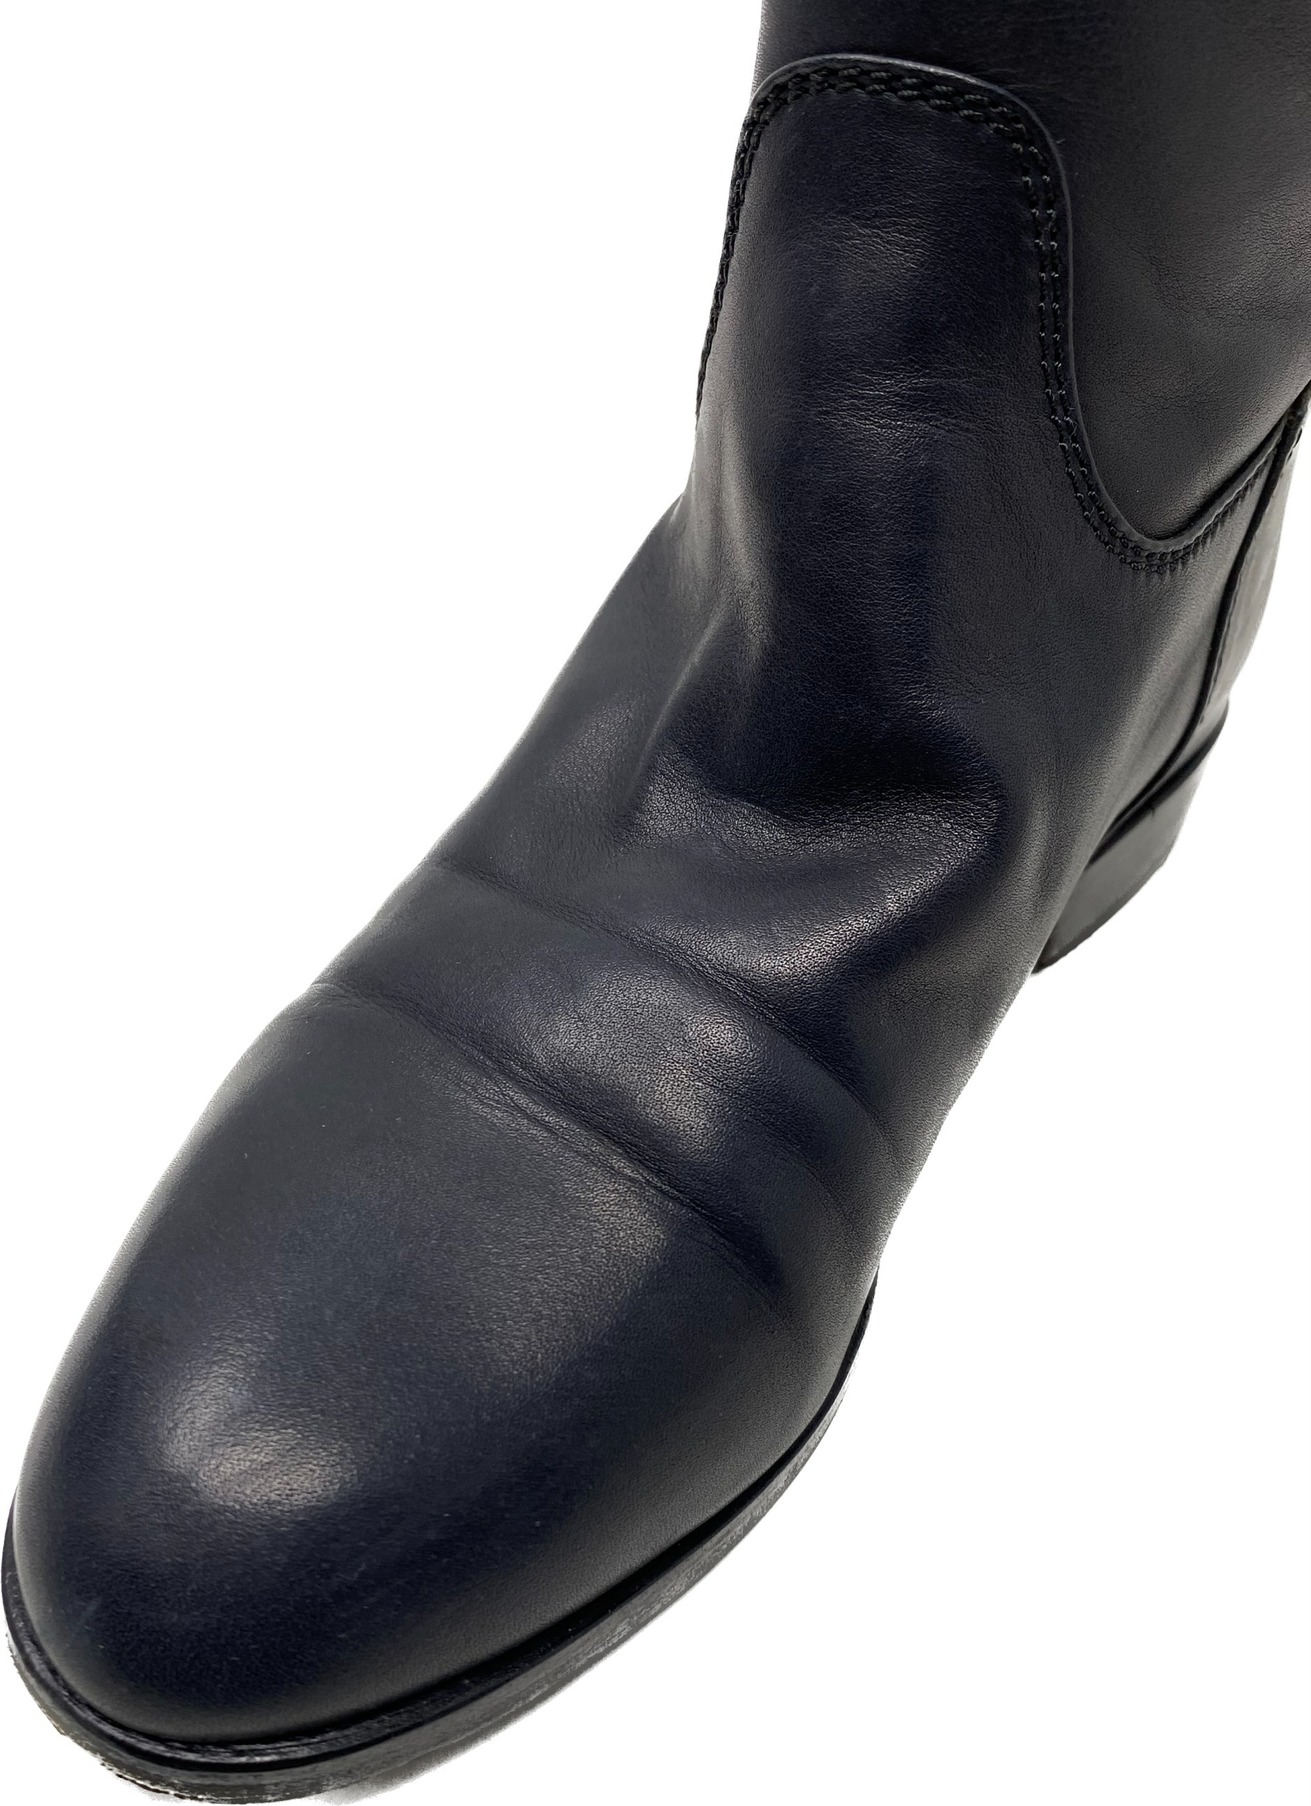 CHANEL (シャネル) ターンロック ブーツ ブラック サイズ:22.5cm